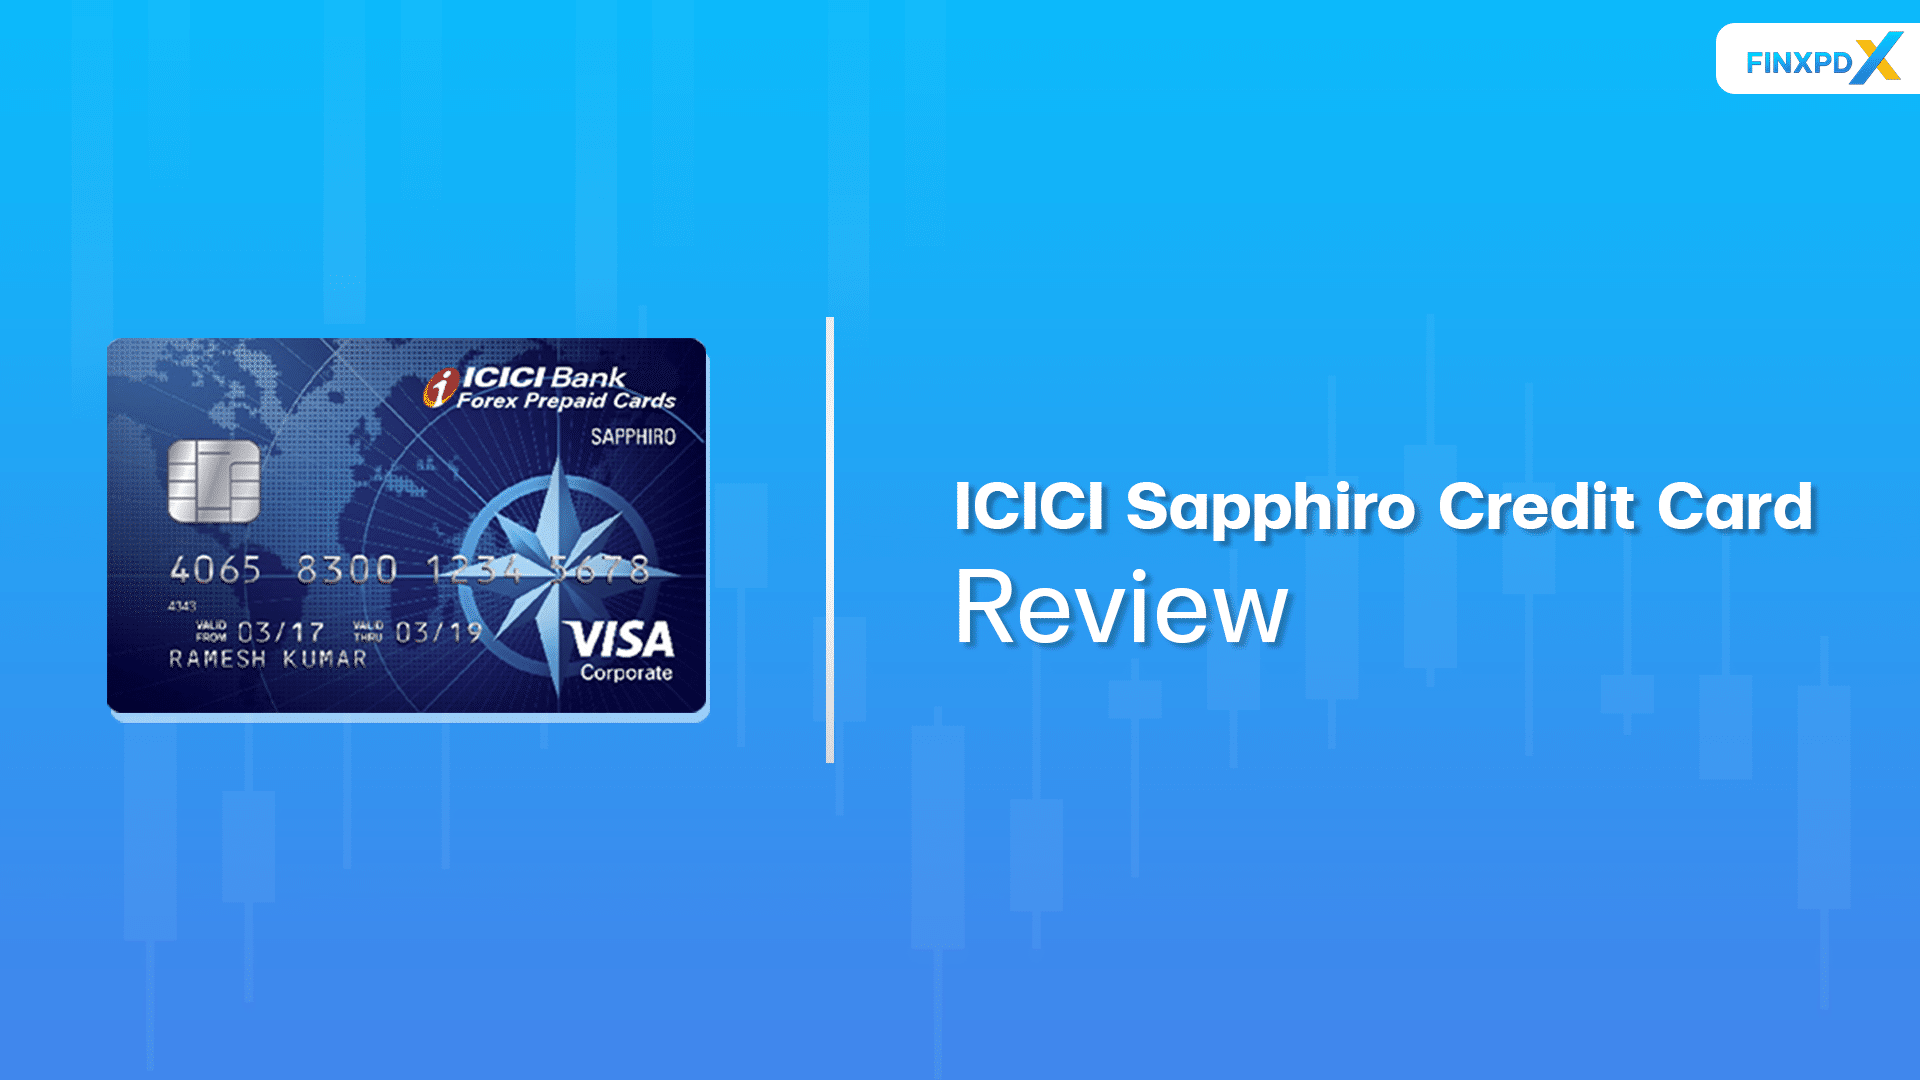 ICICI Sapphiro Credit Card